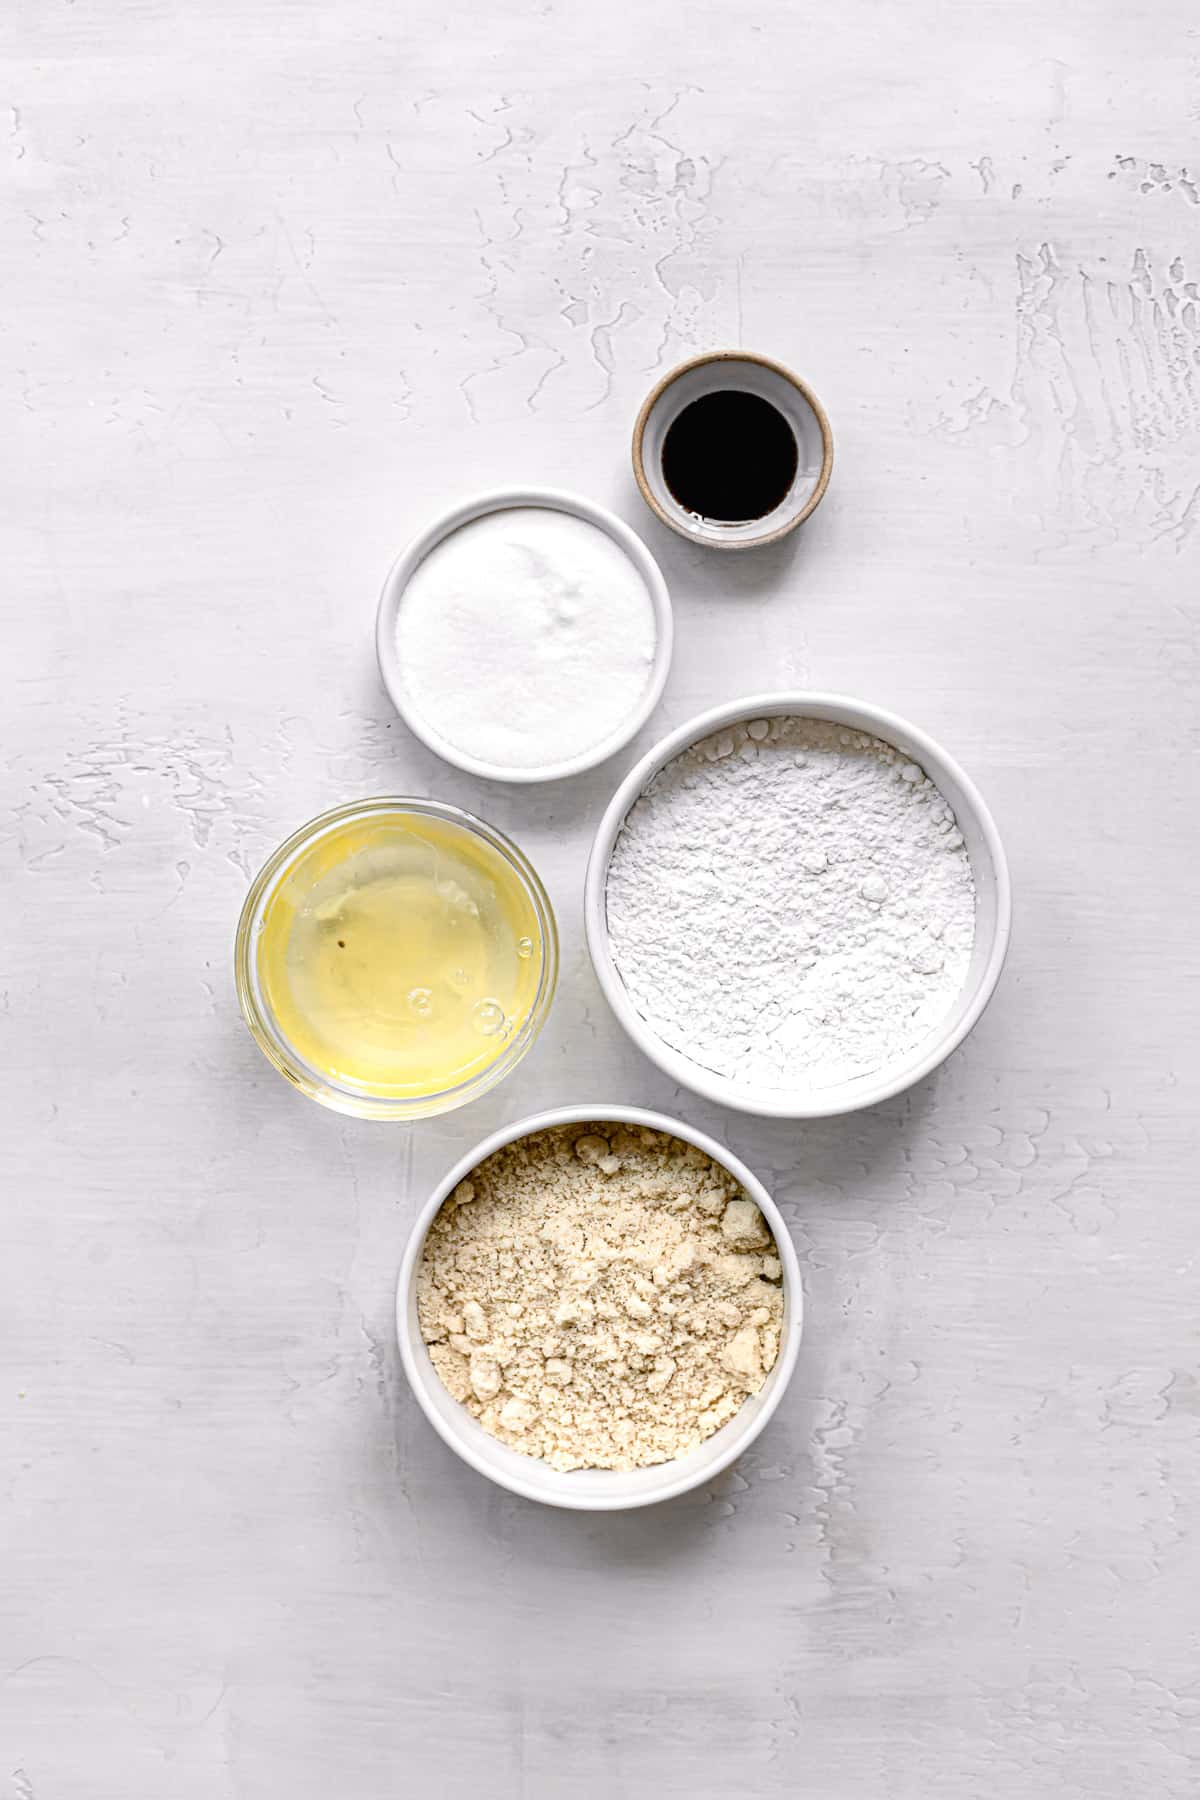 ingredients for vanilla macarons.